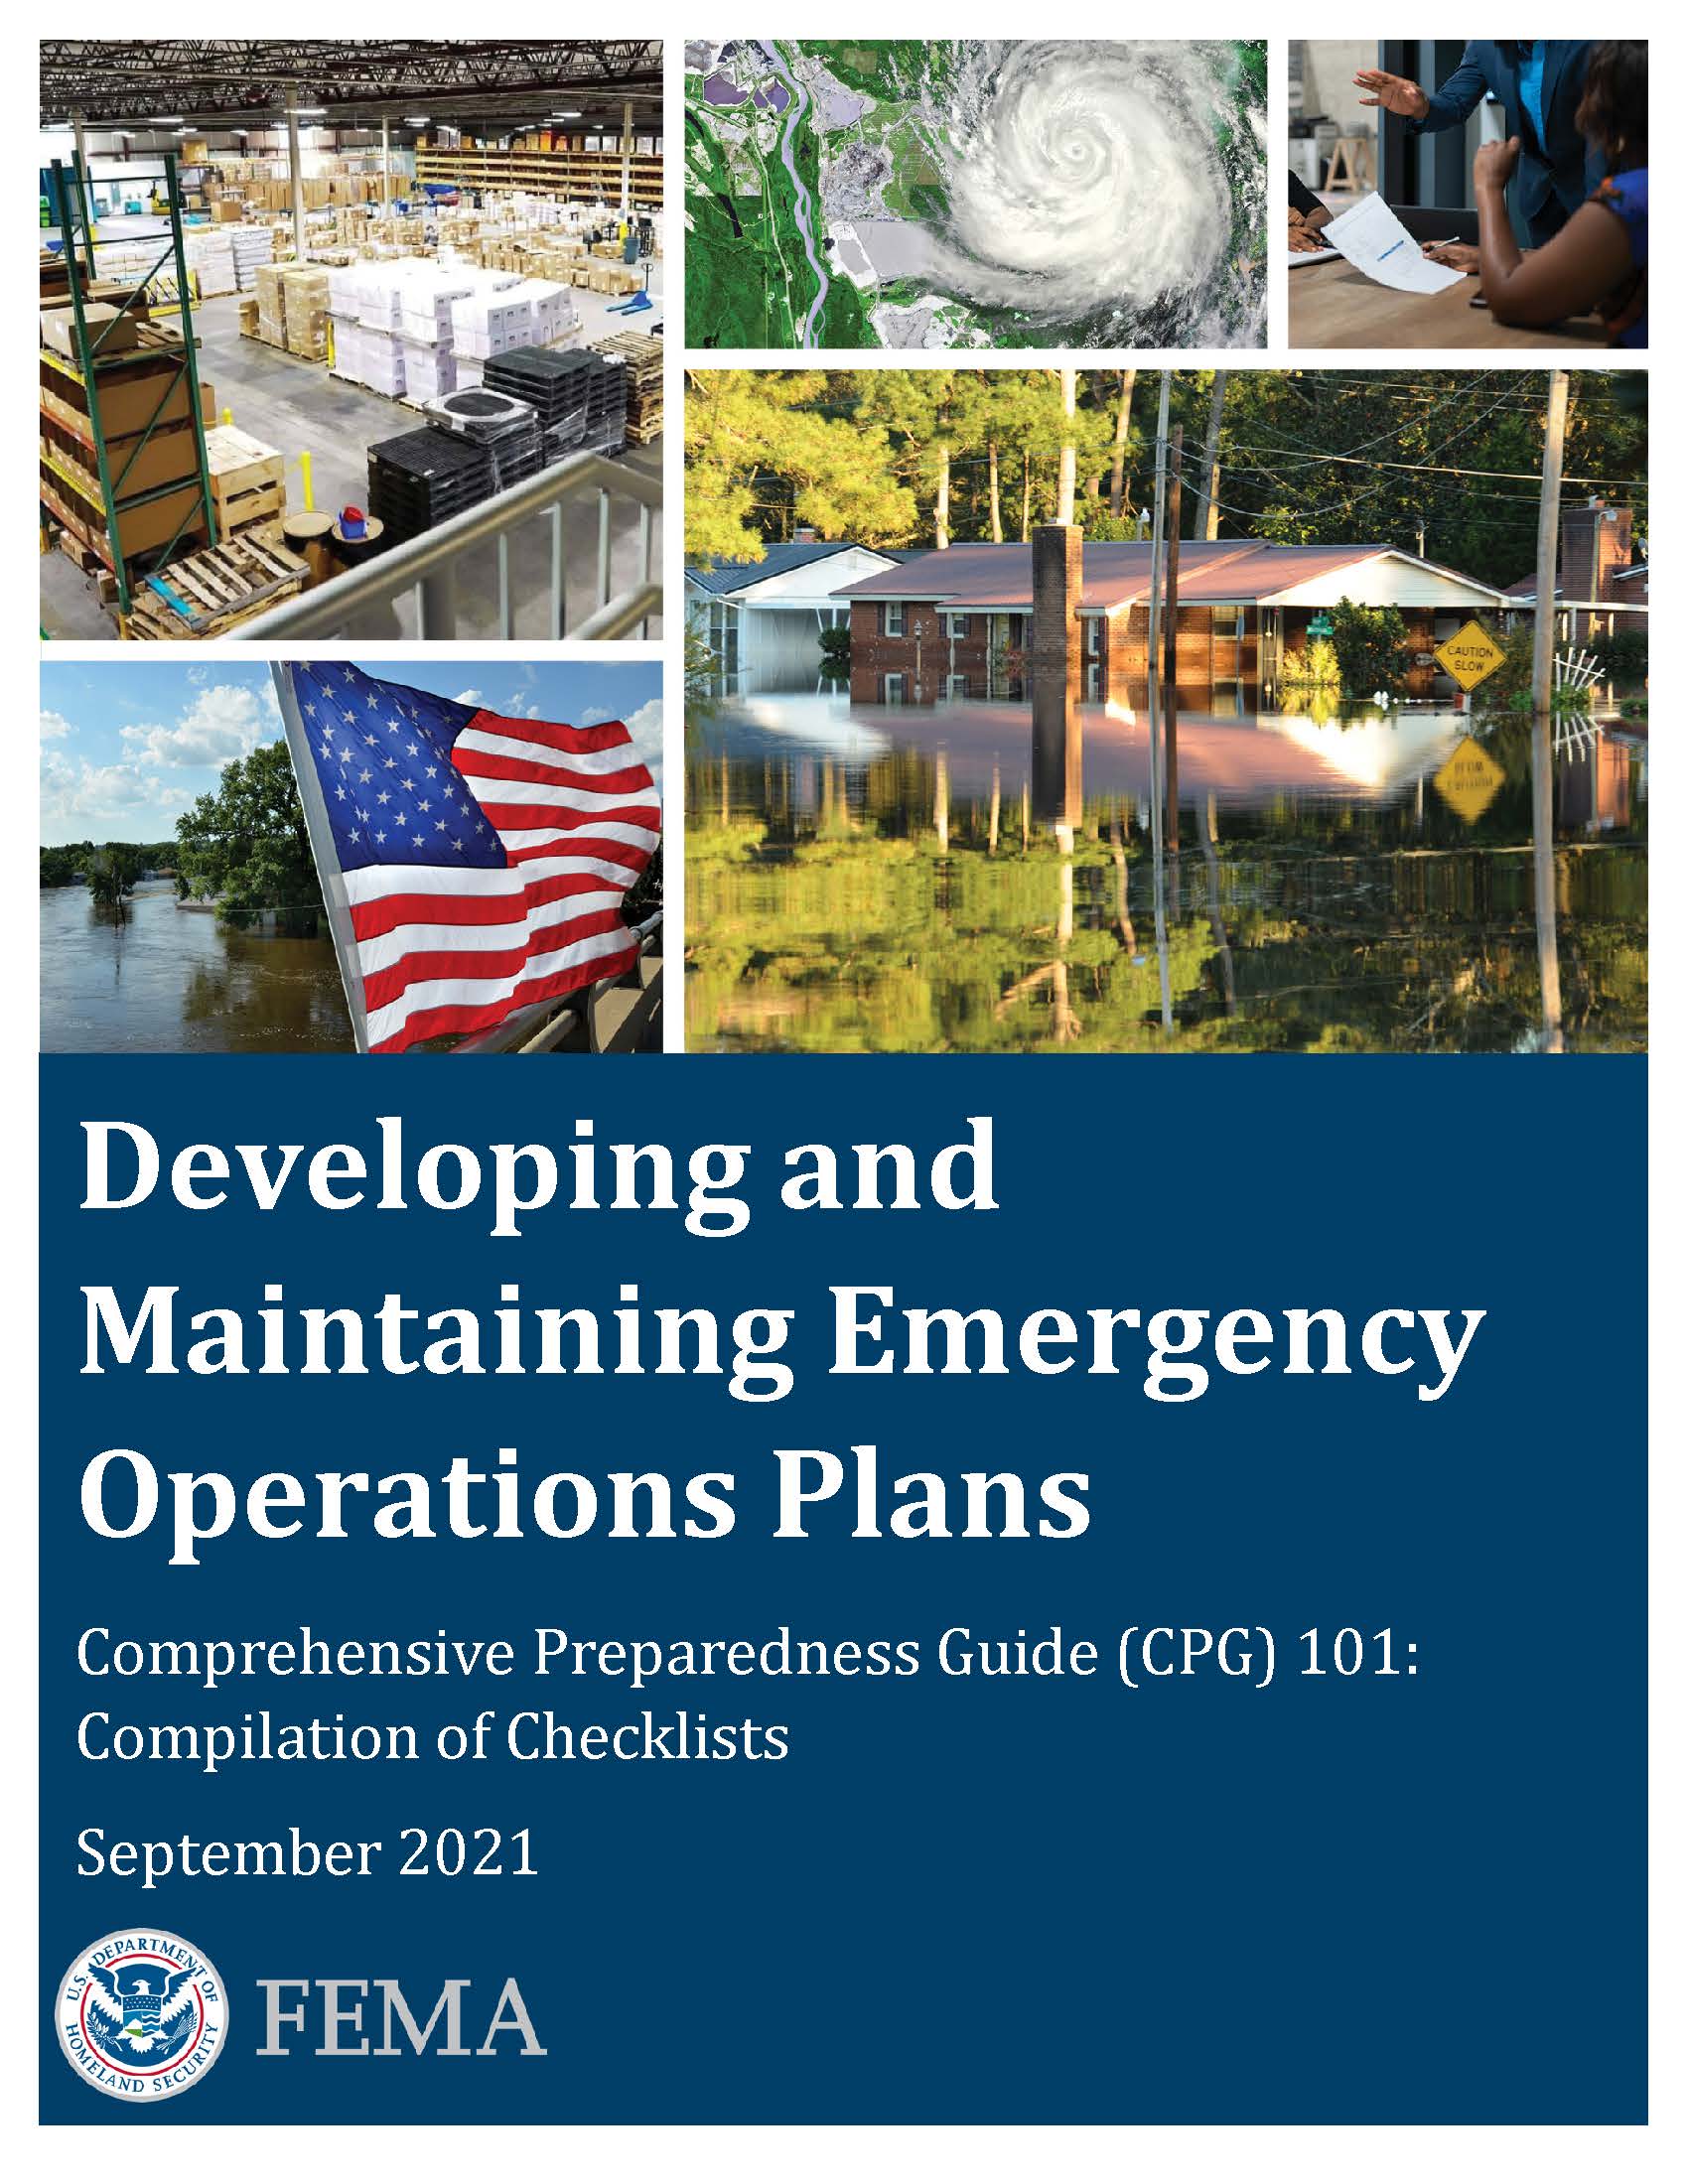 Comprehensive Preparedness Guide (CPG) 101 Cover Page